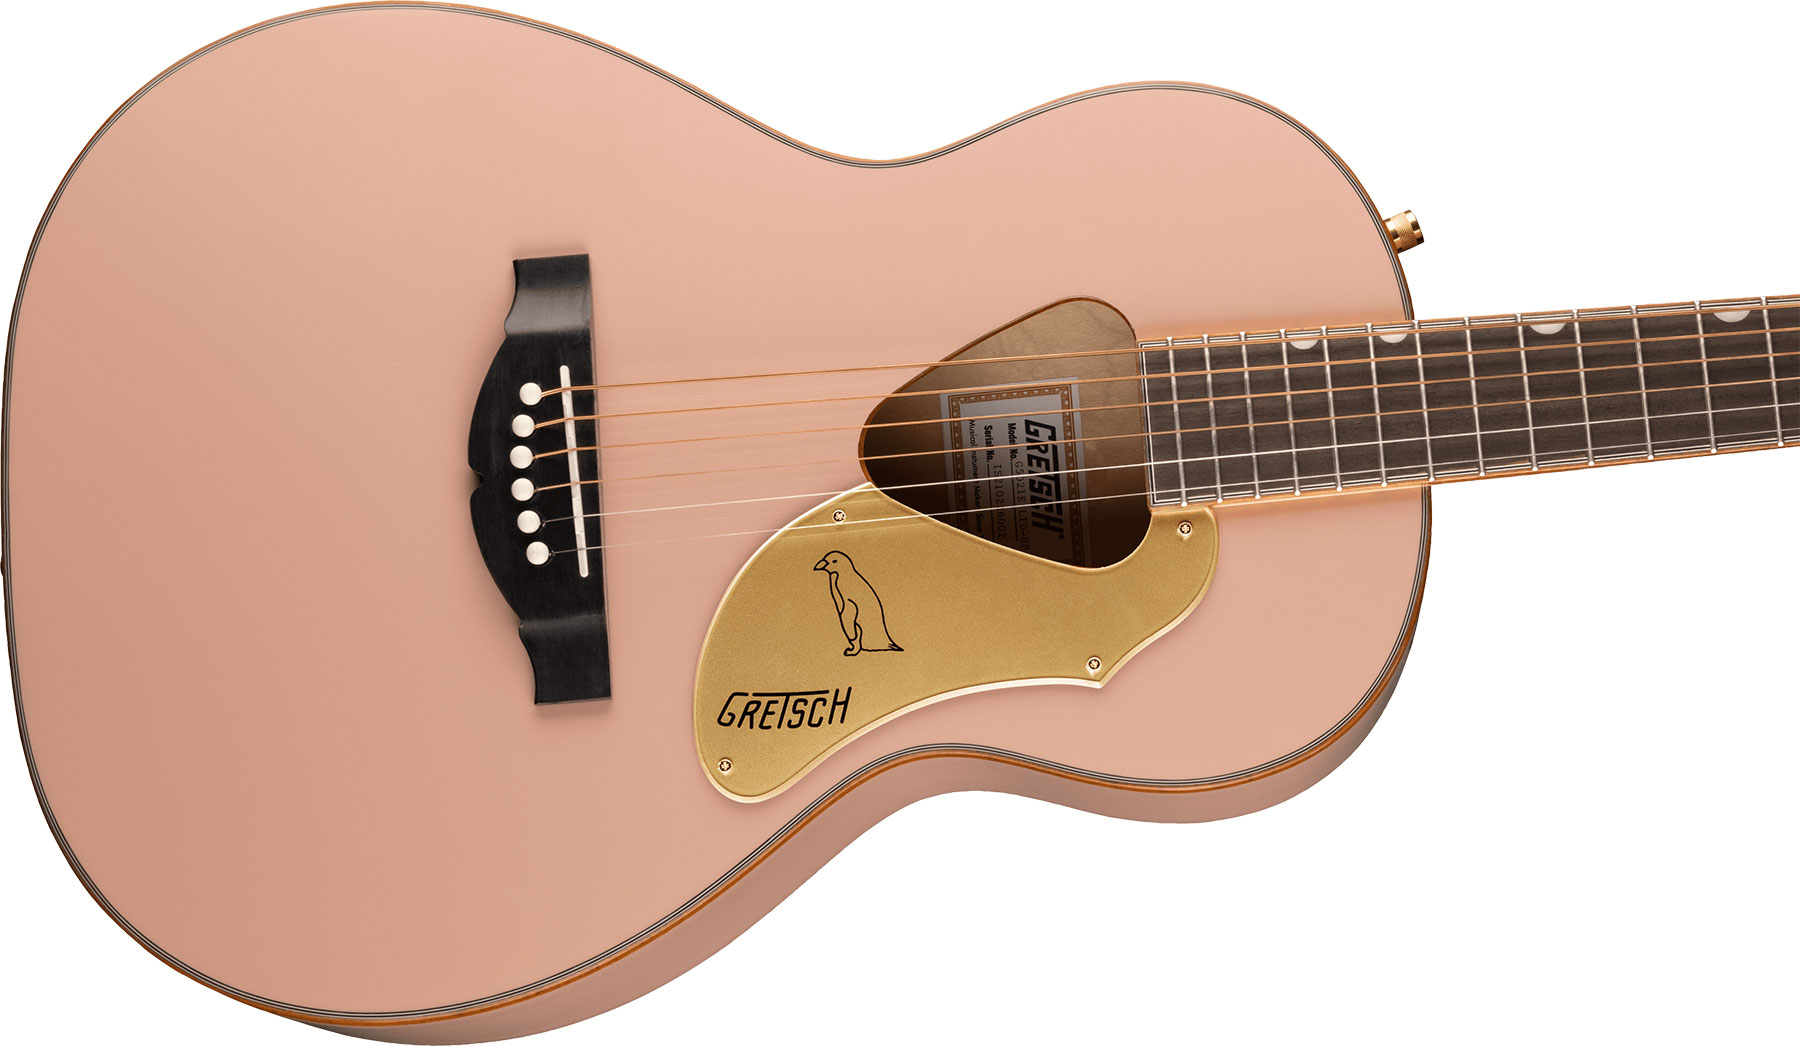 Gretsch G5021e Rancher Penguin Parlor Epicea Erable Lau - Shell Pink - Elektroakustische Gitarre - Variation 2